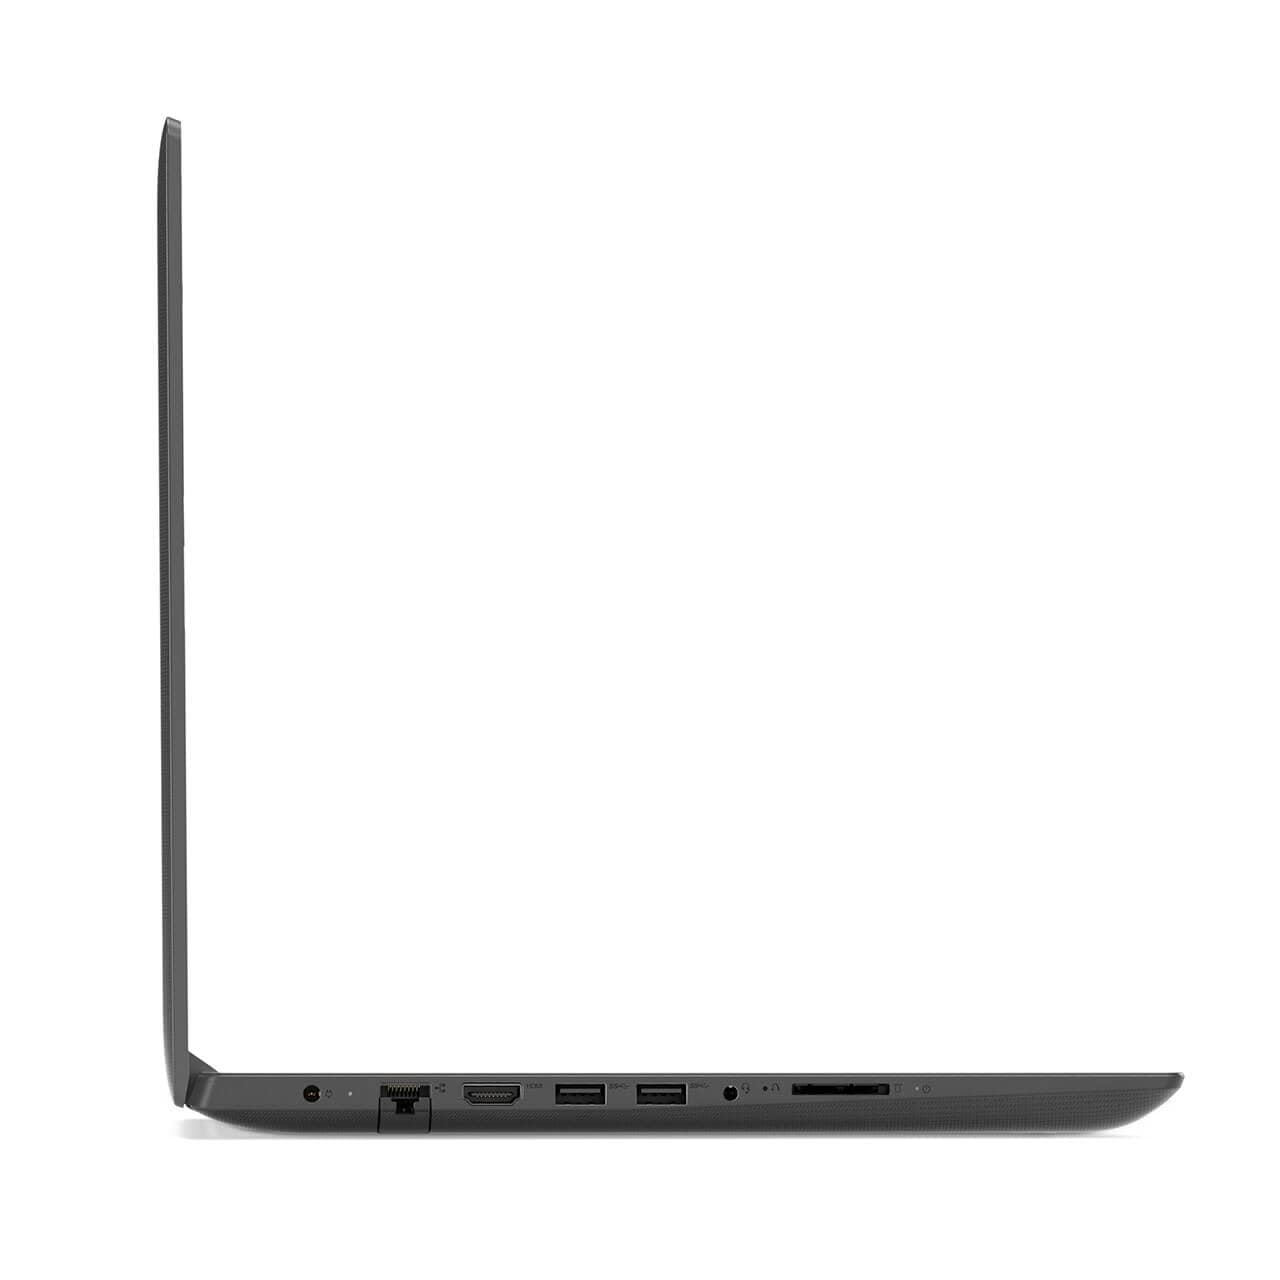 IdeaPad 130 (15) | Simple, Reliable 39.62cms (15.6) Laptop | Lenovo India